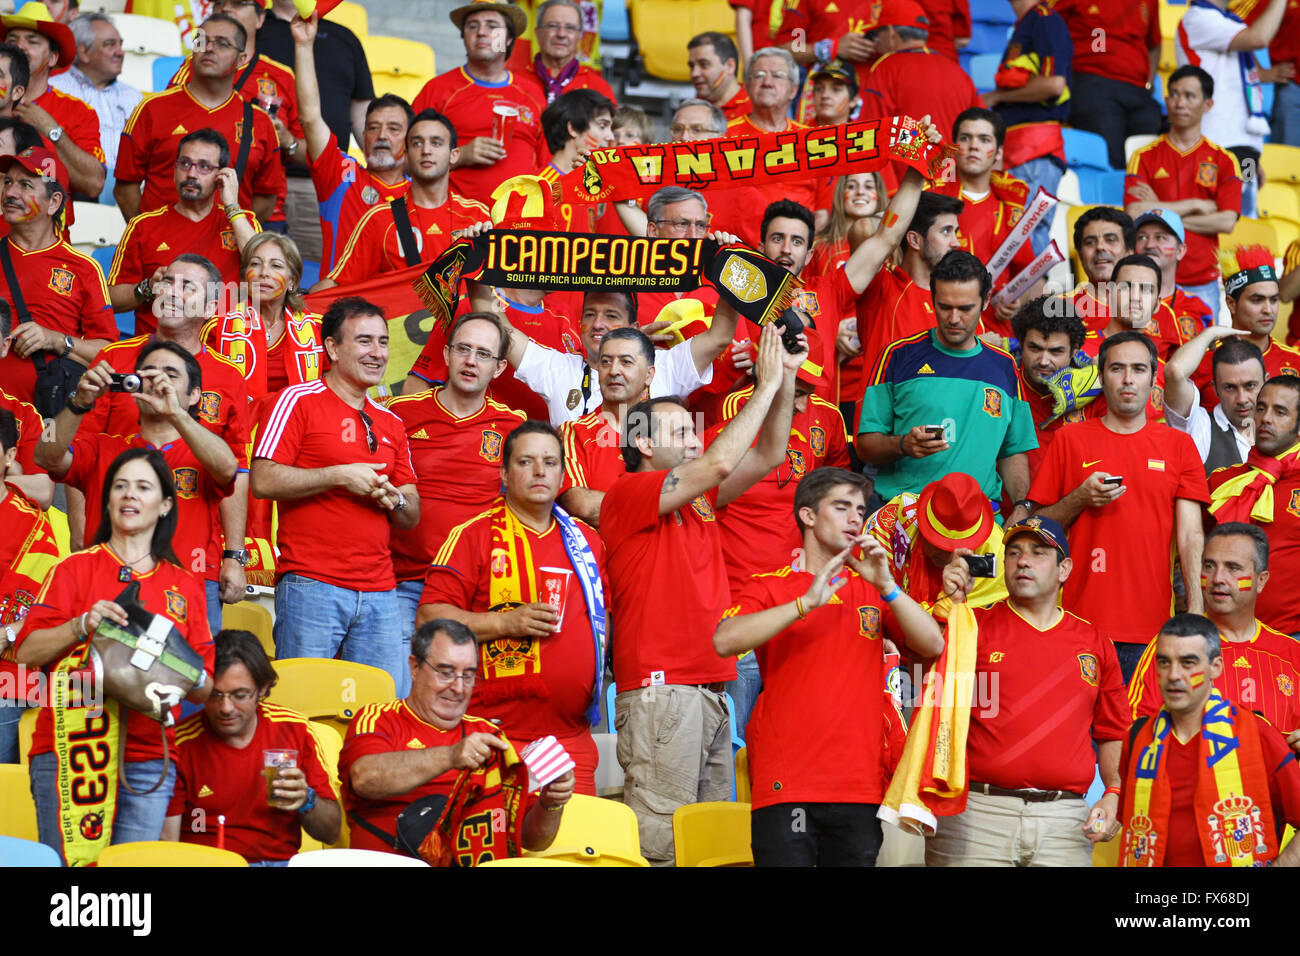 KYIV, UKRAINE - JULY 1, 2012: Spain national football team supporters ...